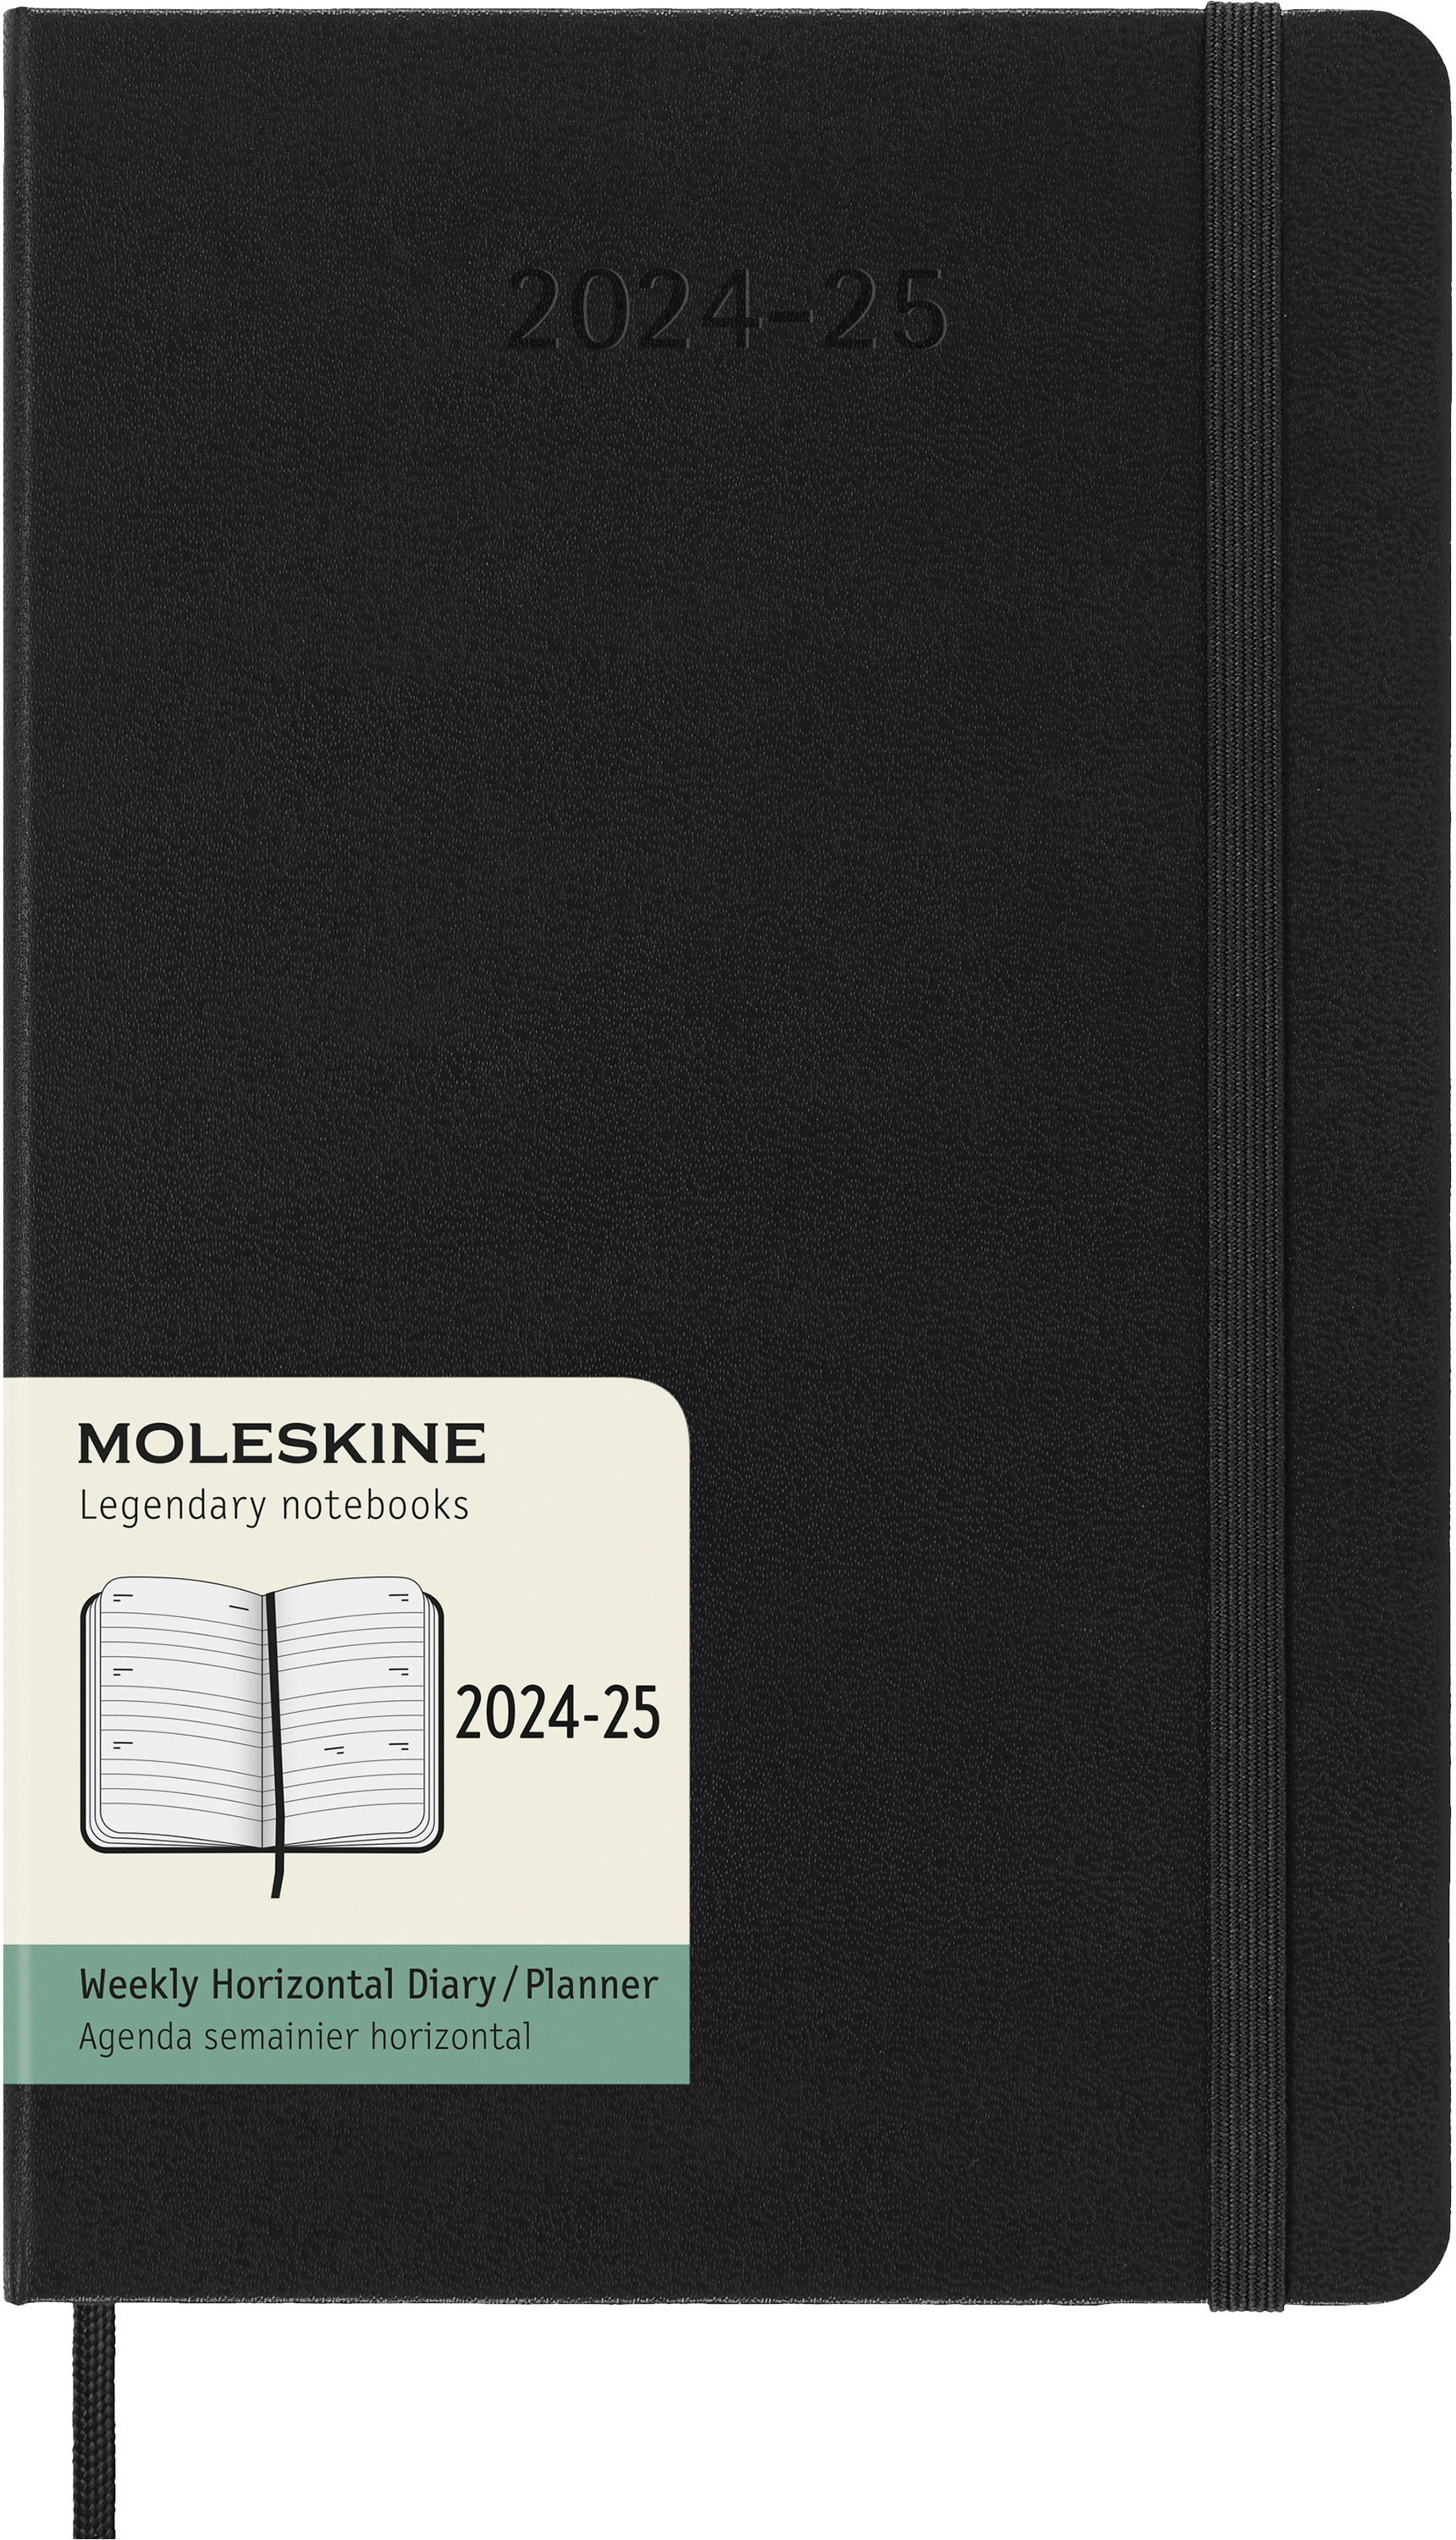 MOLESKINE Agenda semainier 24/25 999270698 18M HC noir 13x21cm